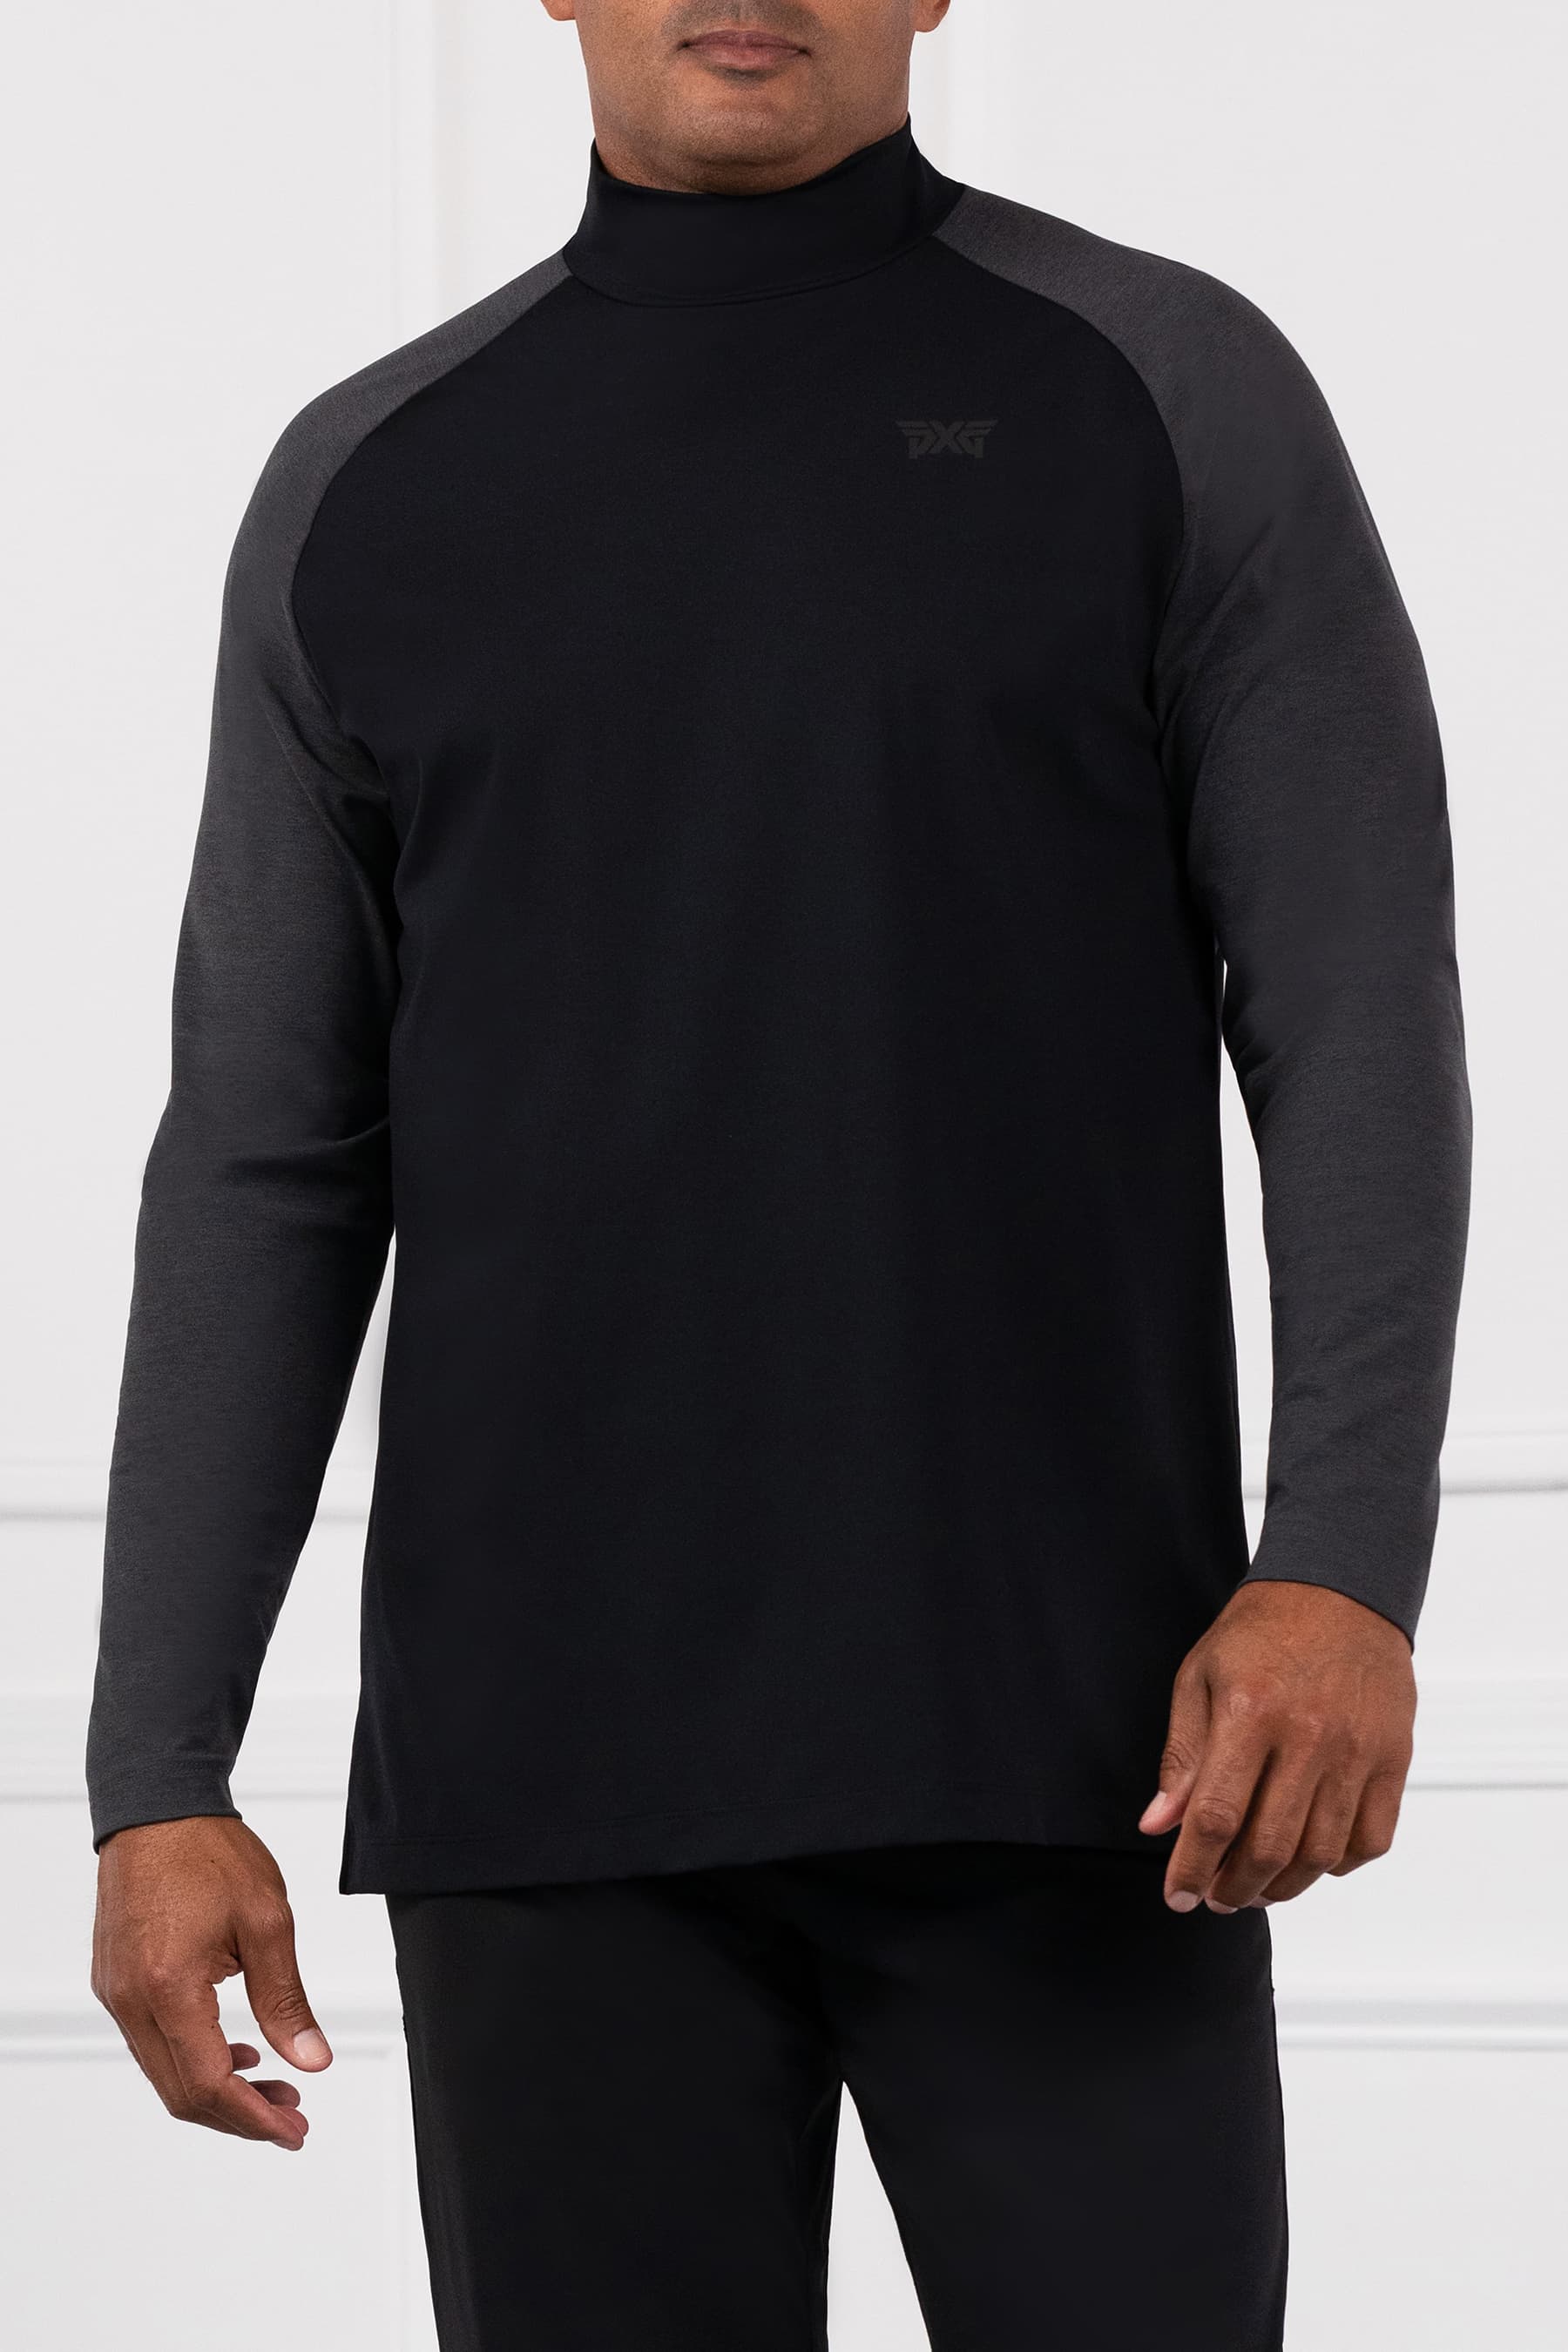 PXG Men's Hooded Long Sleeve Raglan Top Black | Size Medium